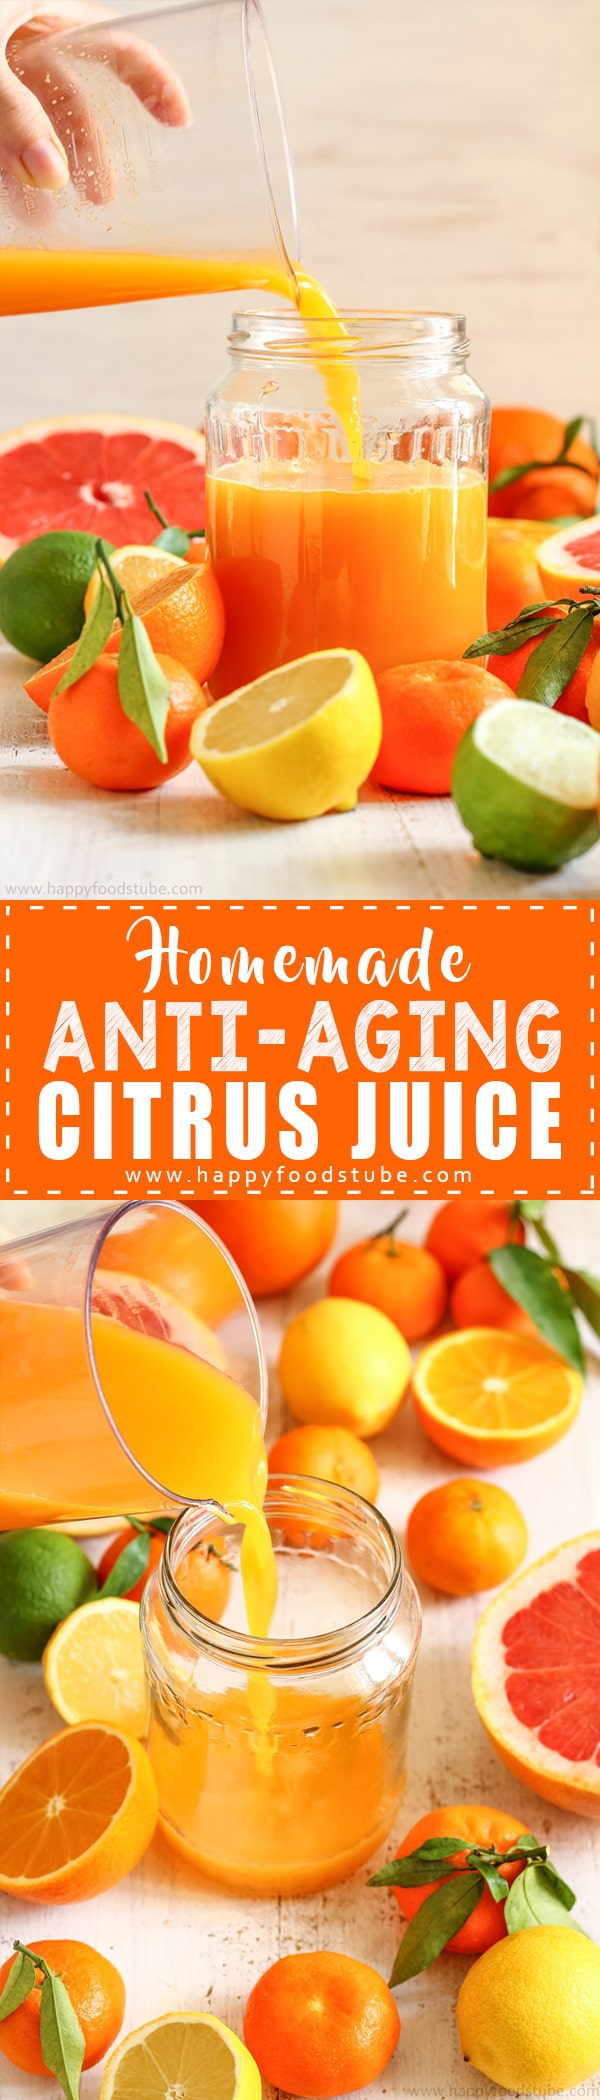 nasa anti aging juice recept)